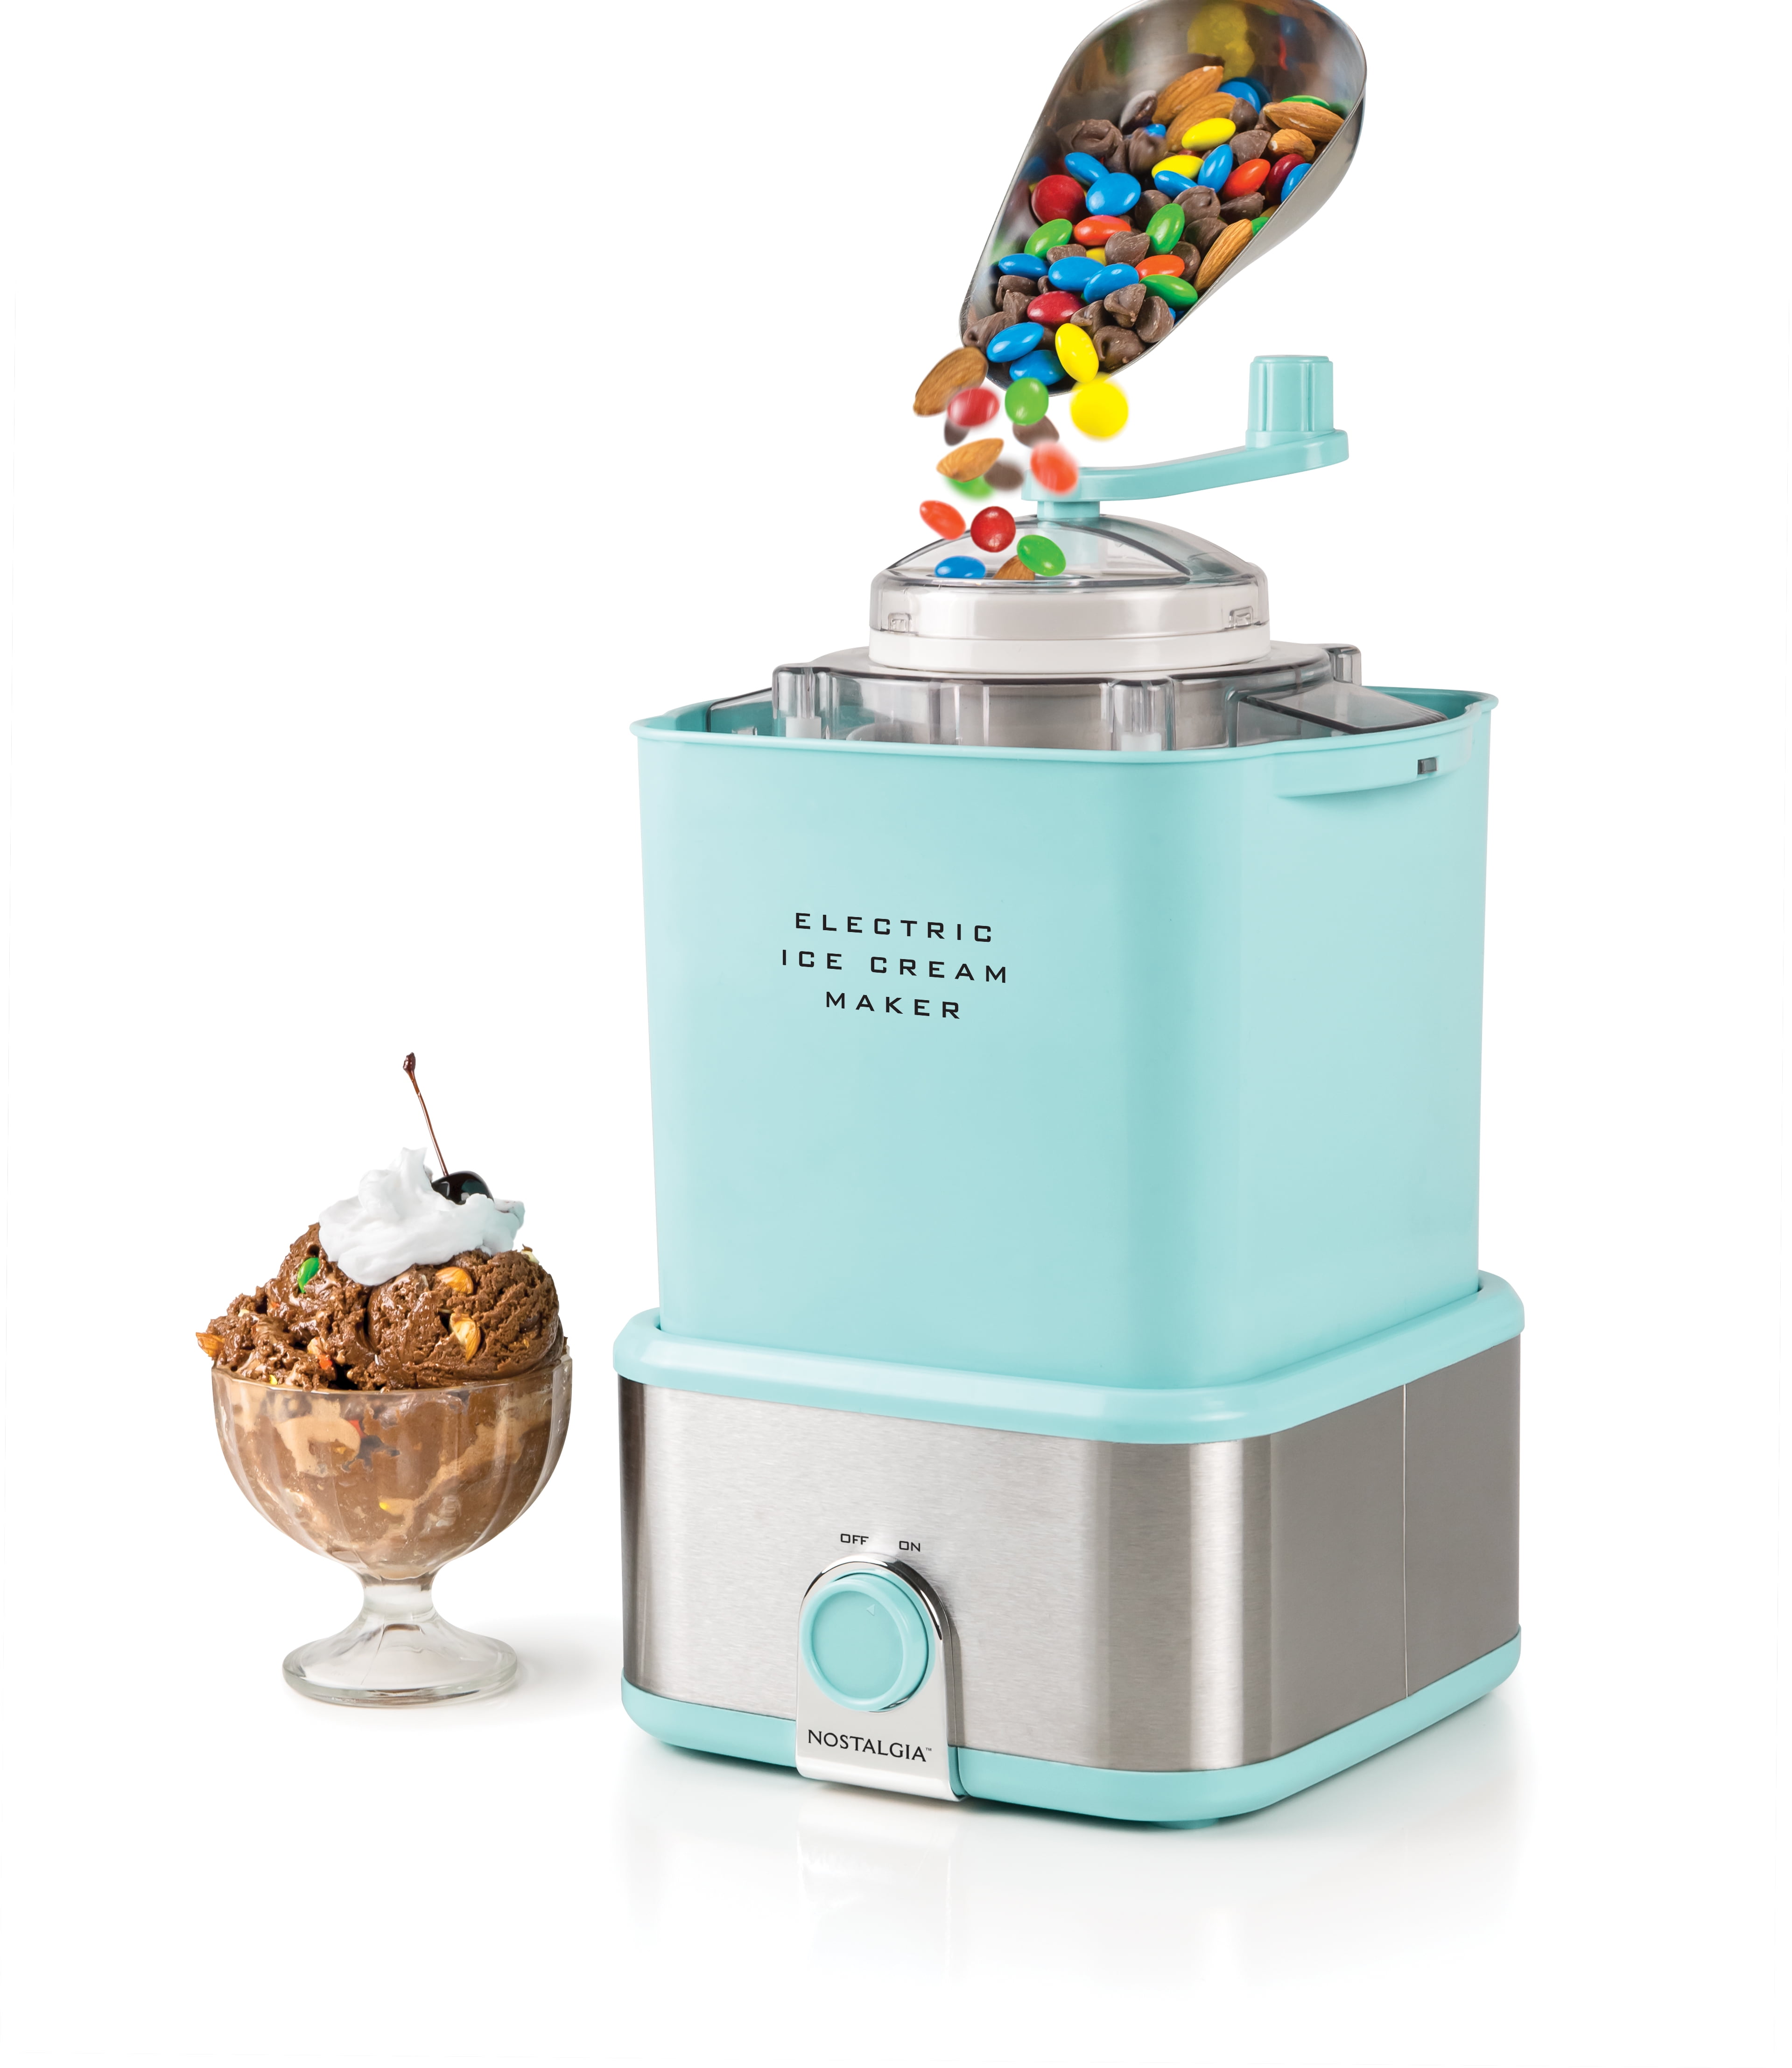  Nostalgia Electric Ice Cream Maker - Old Fashioned Soft Serve Ice  Cream Machine Makes Frozen Yogurt or Gelato in Minutes - Fun Kitchen  Appliance - Aqua - 4 Quart: Home & Kitchen